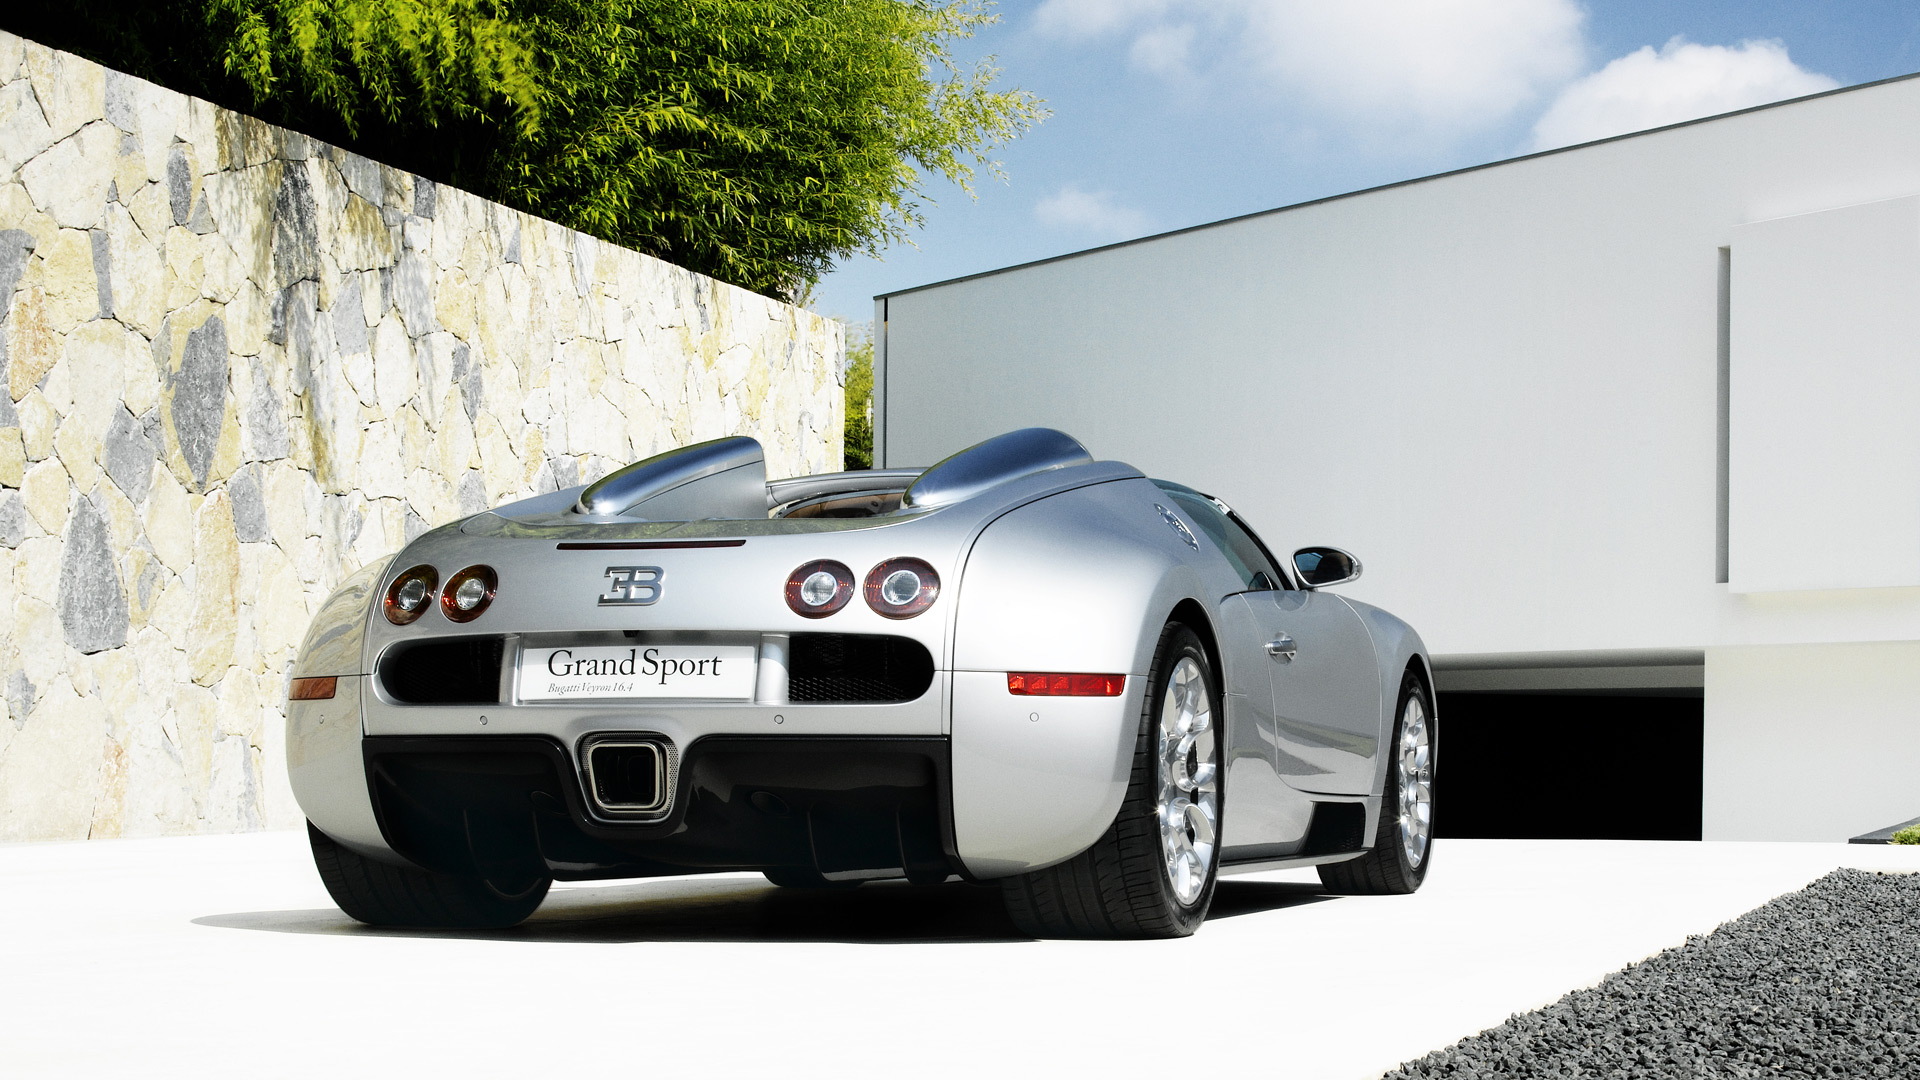 Bugatti Veyron Grand Sport prototype #001